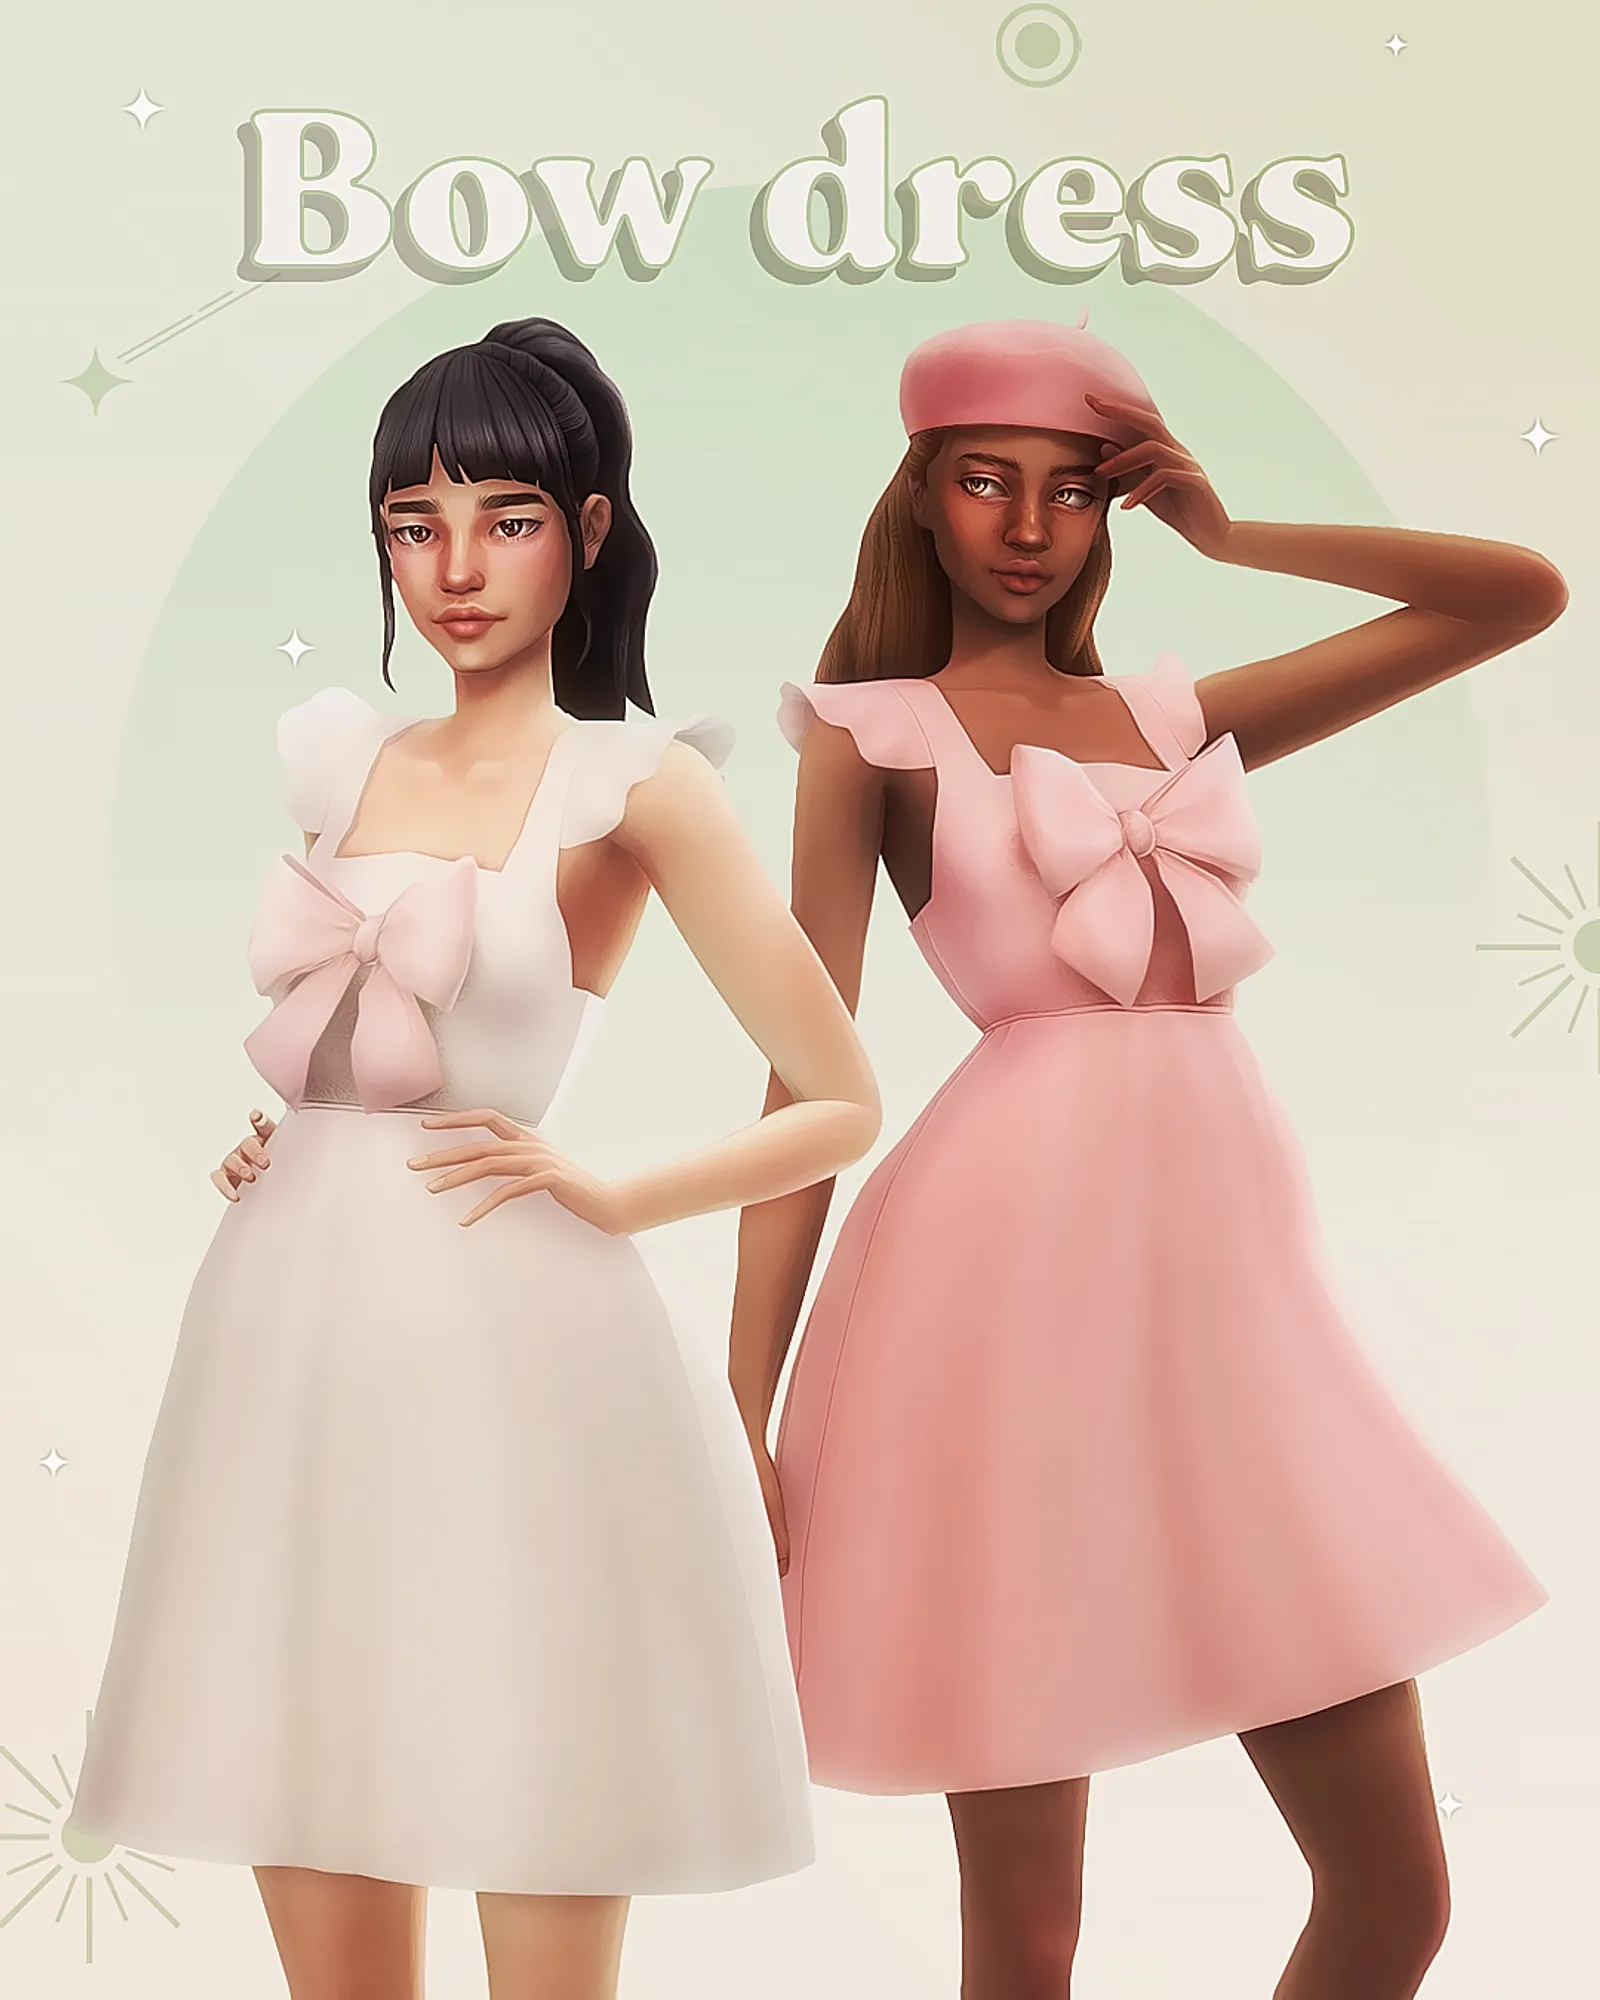 Bow dress